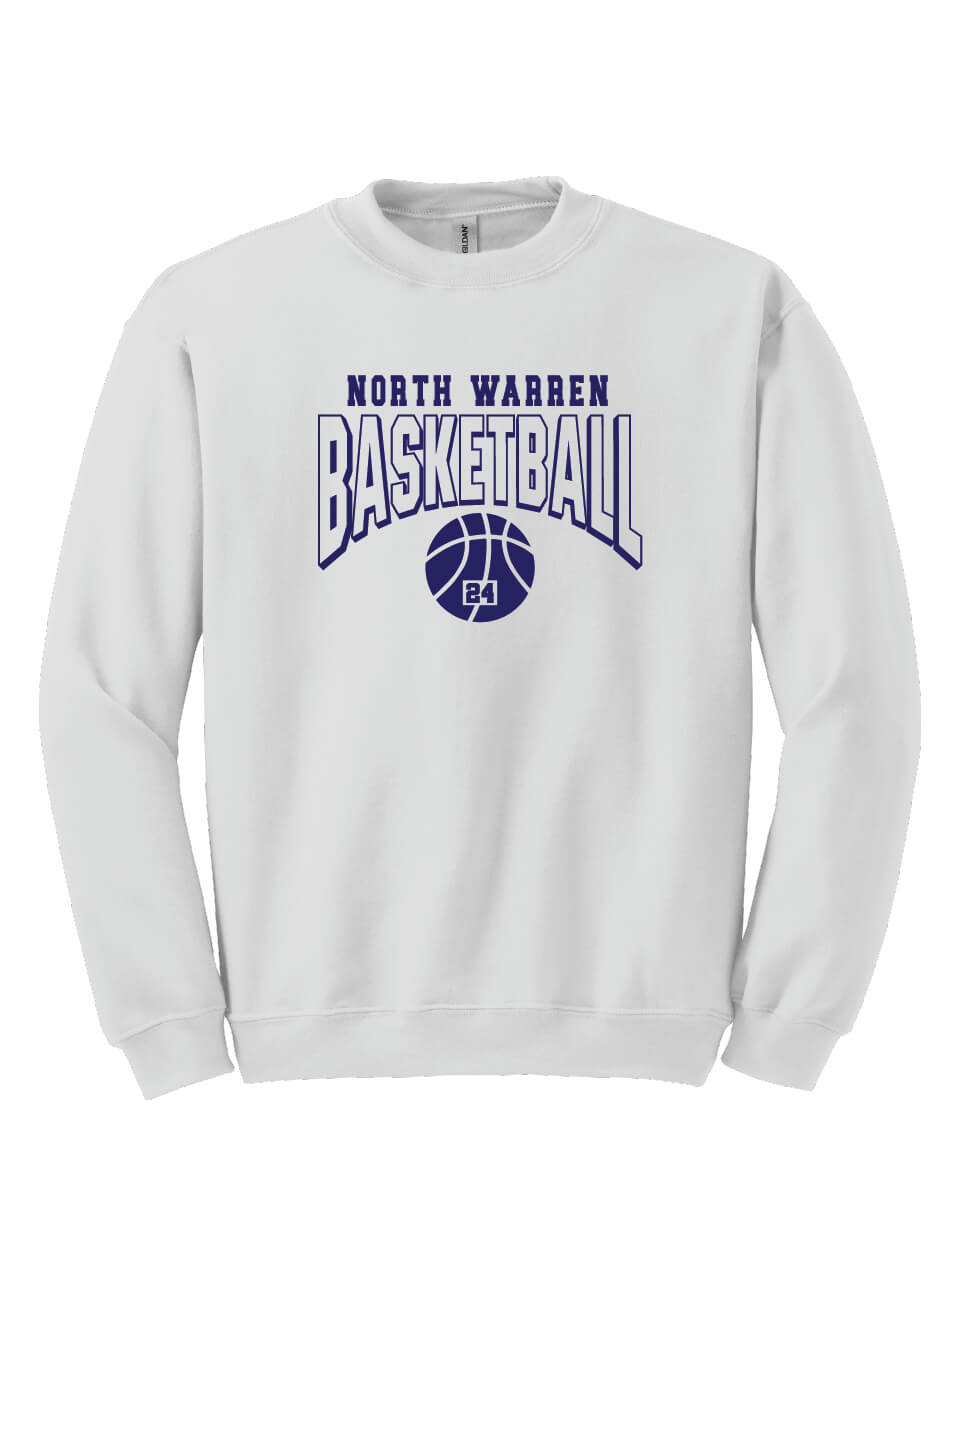 Basketball Crewneck Sweatshirt white